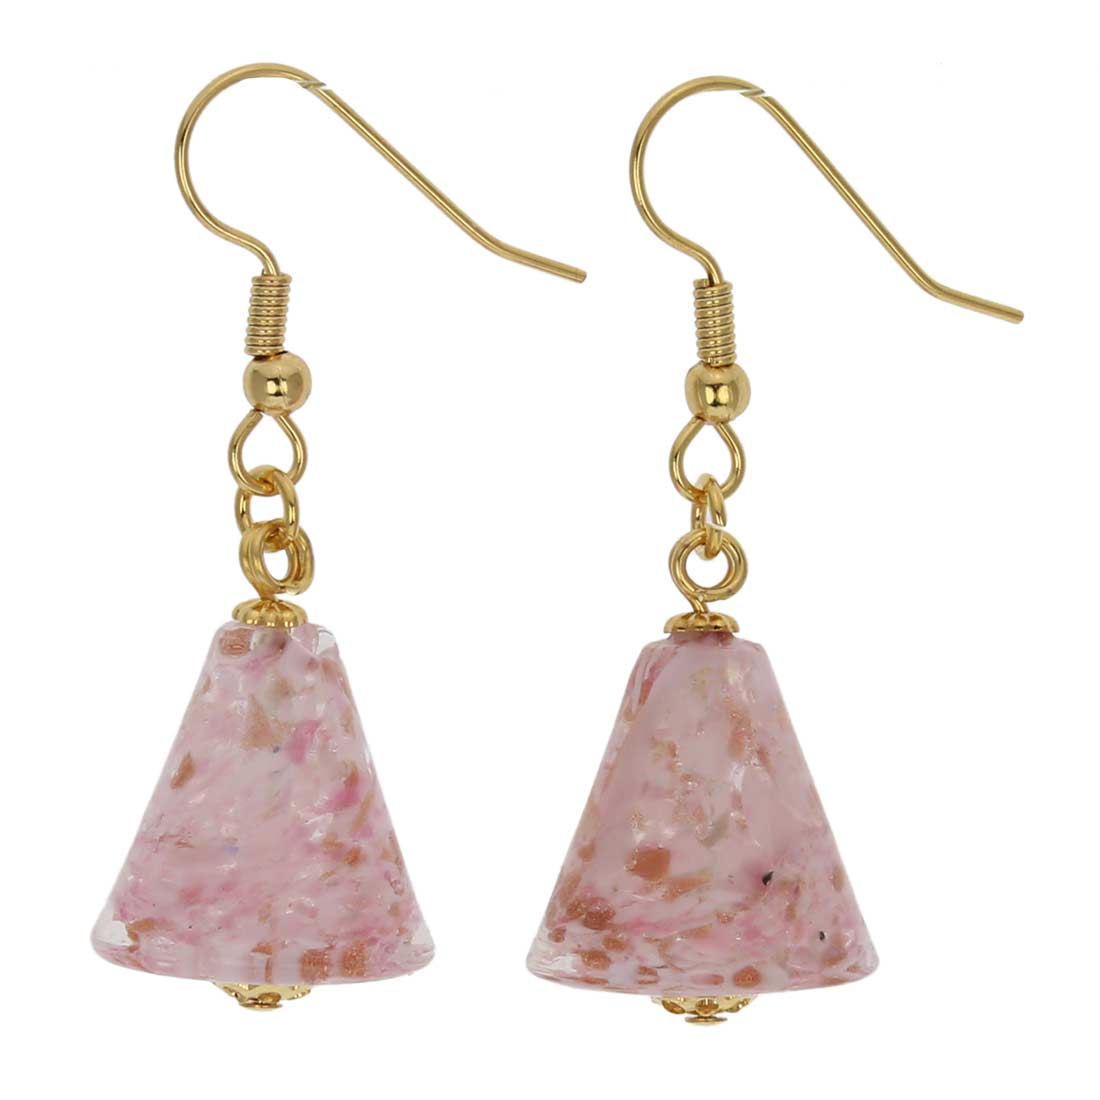 Starlight Cones Earrings - Carnation Pink